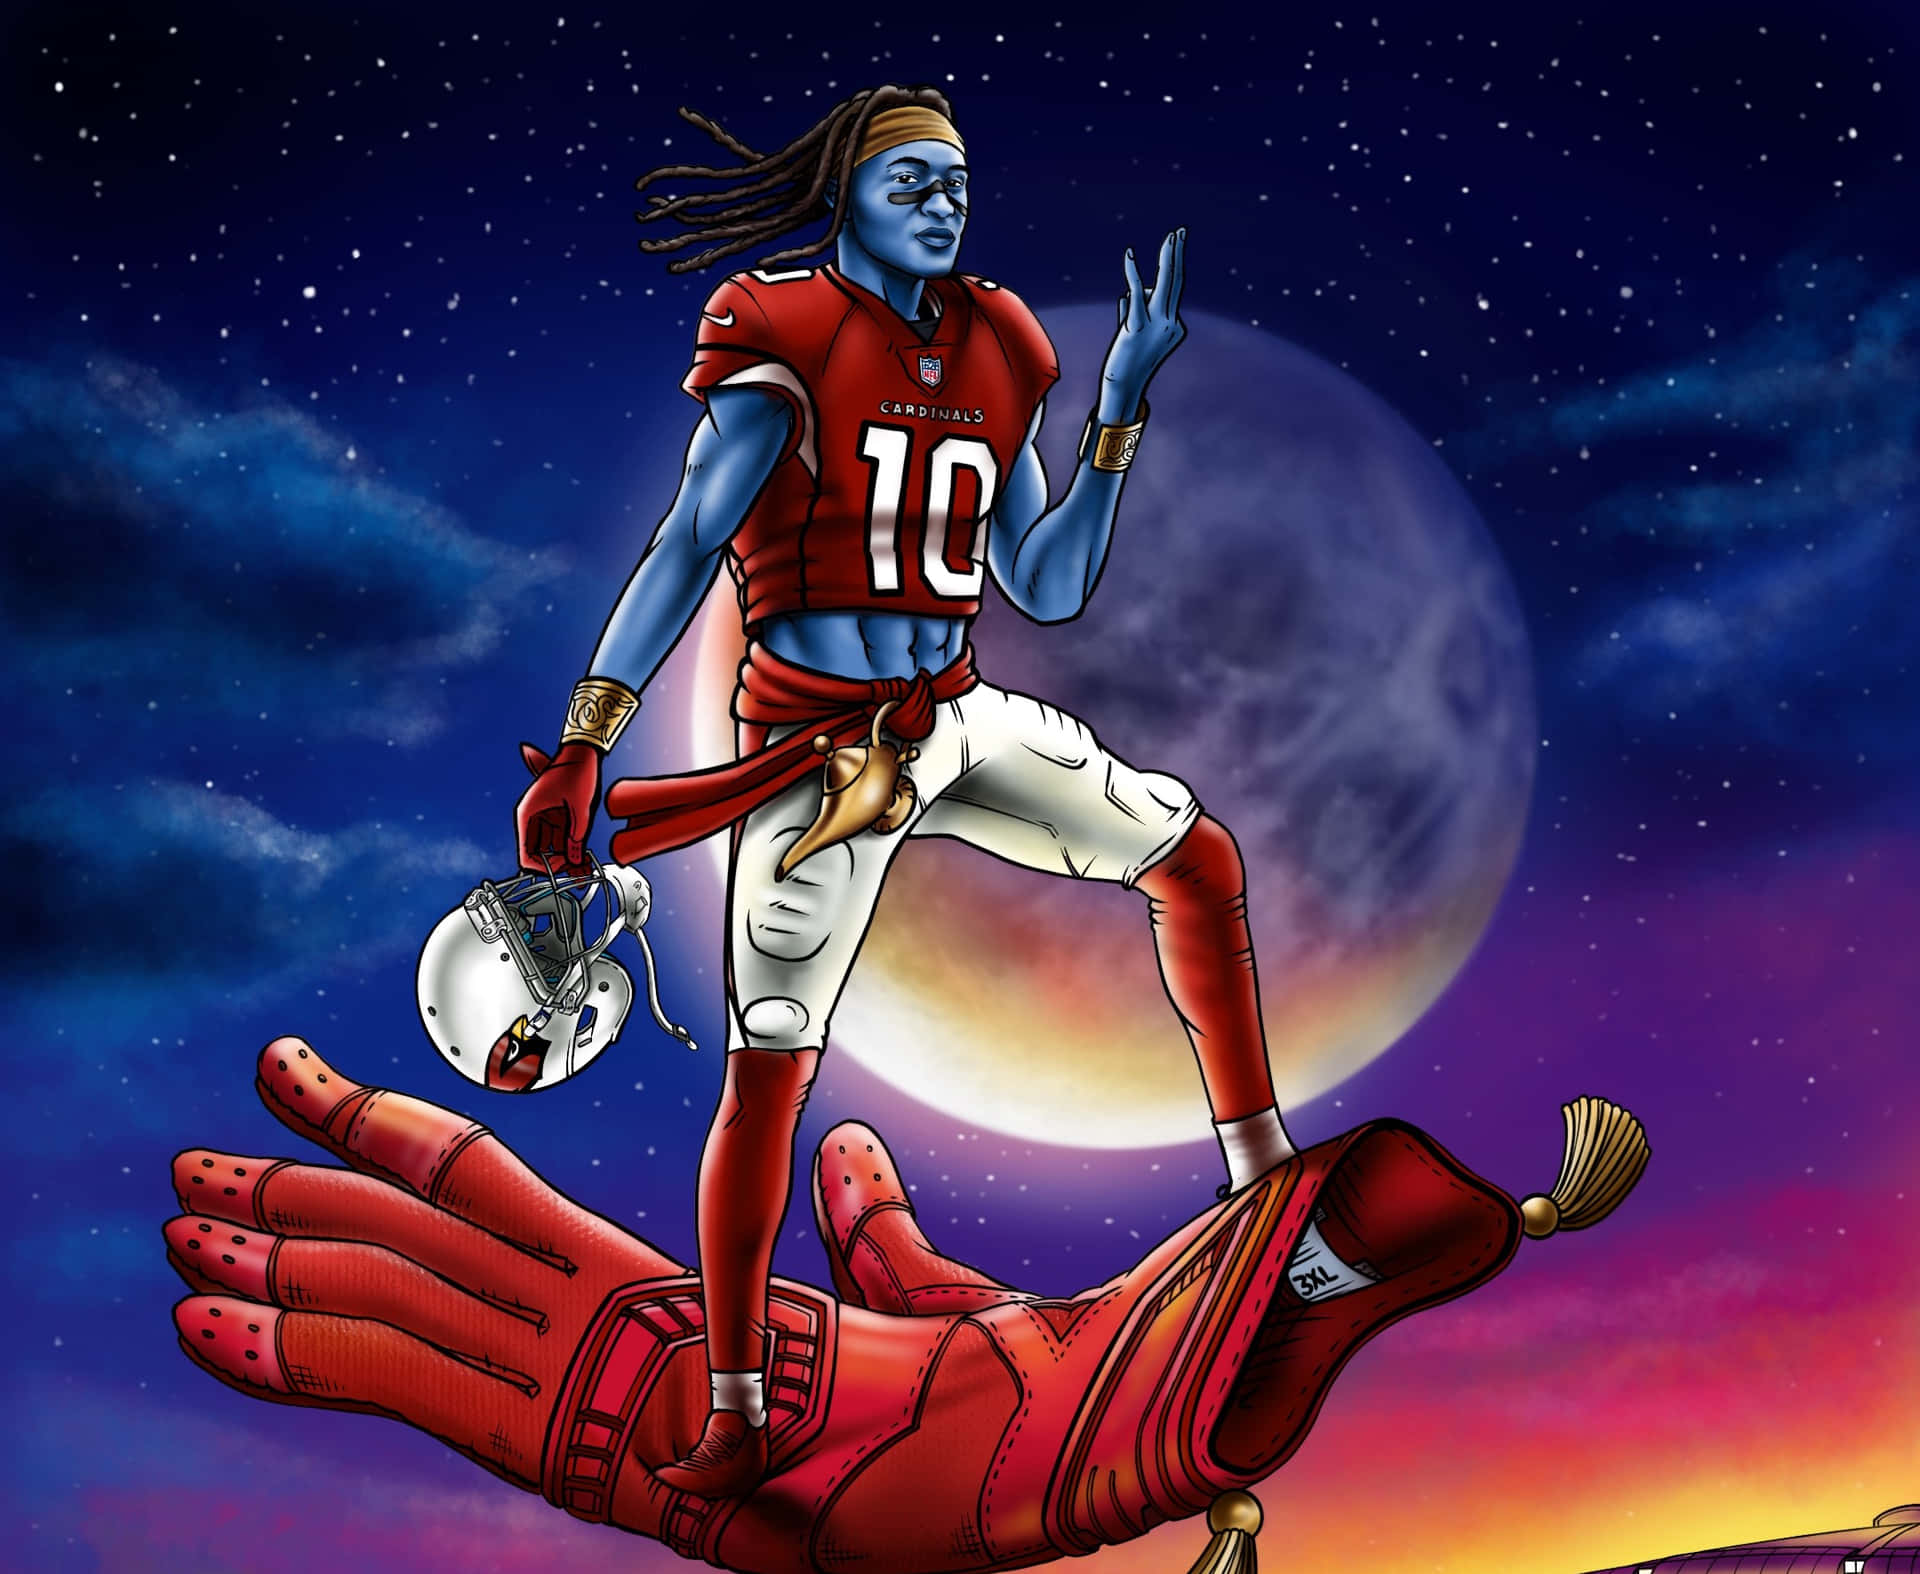 Cosmic Football Player Illustration Wallpaper